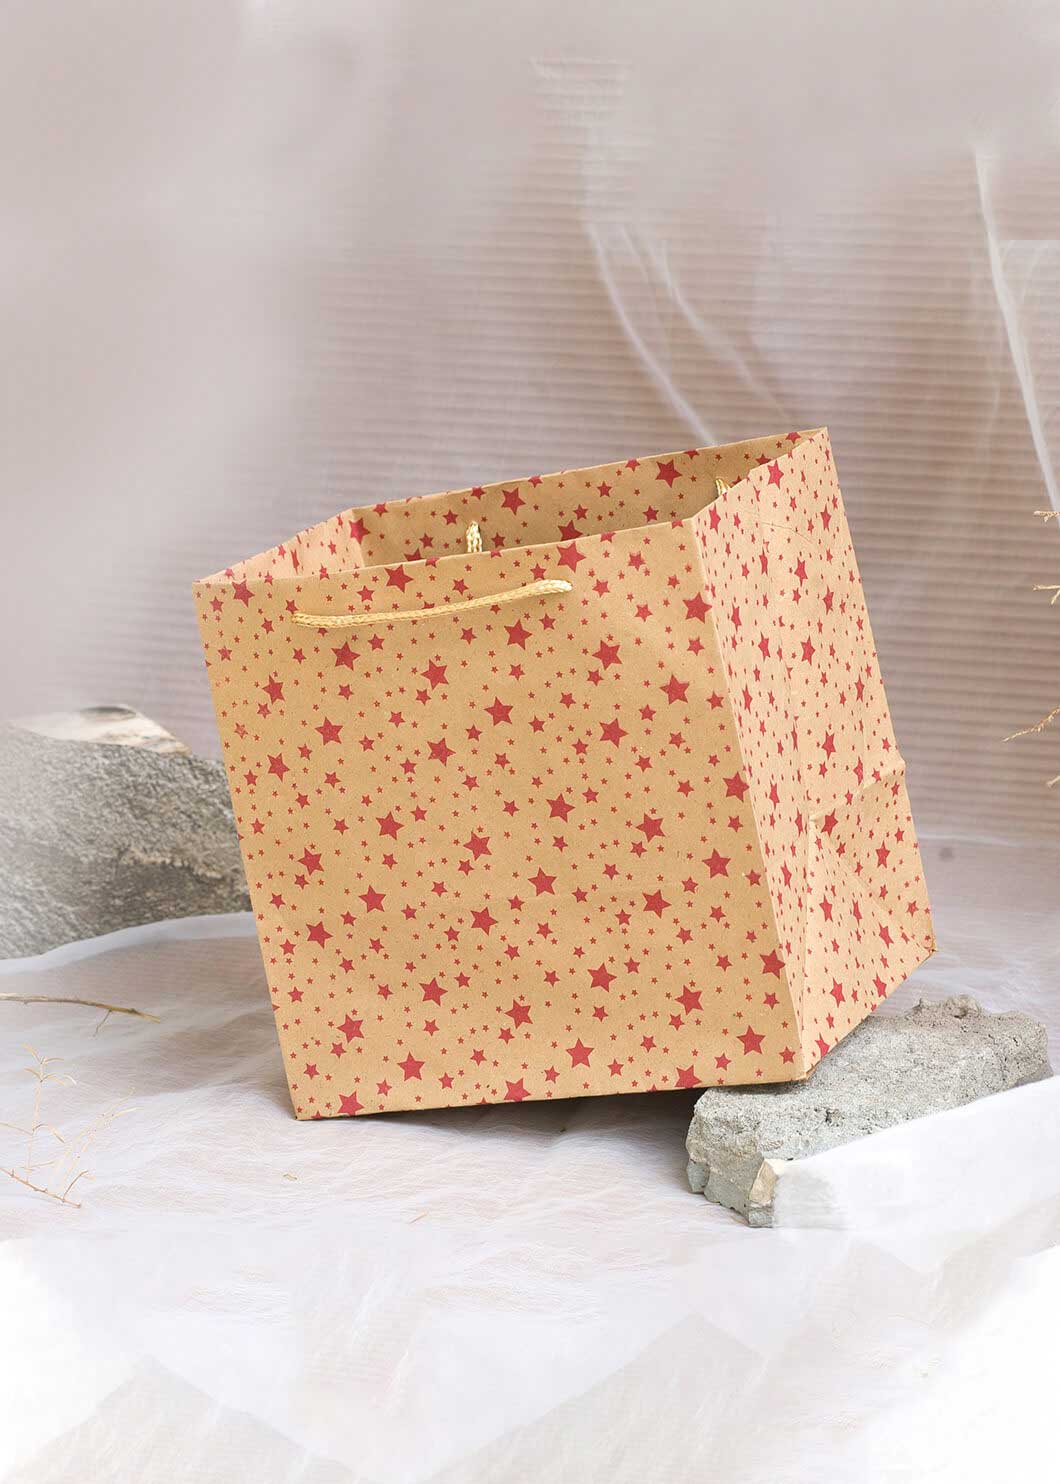 Craft Paper Bag Star Pattern - Craft Bag - Golden Silver Red - 7x5 Paper Bag